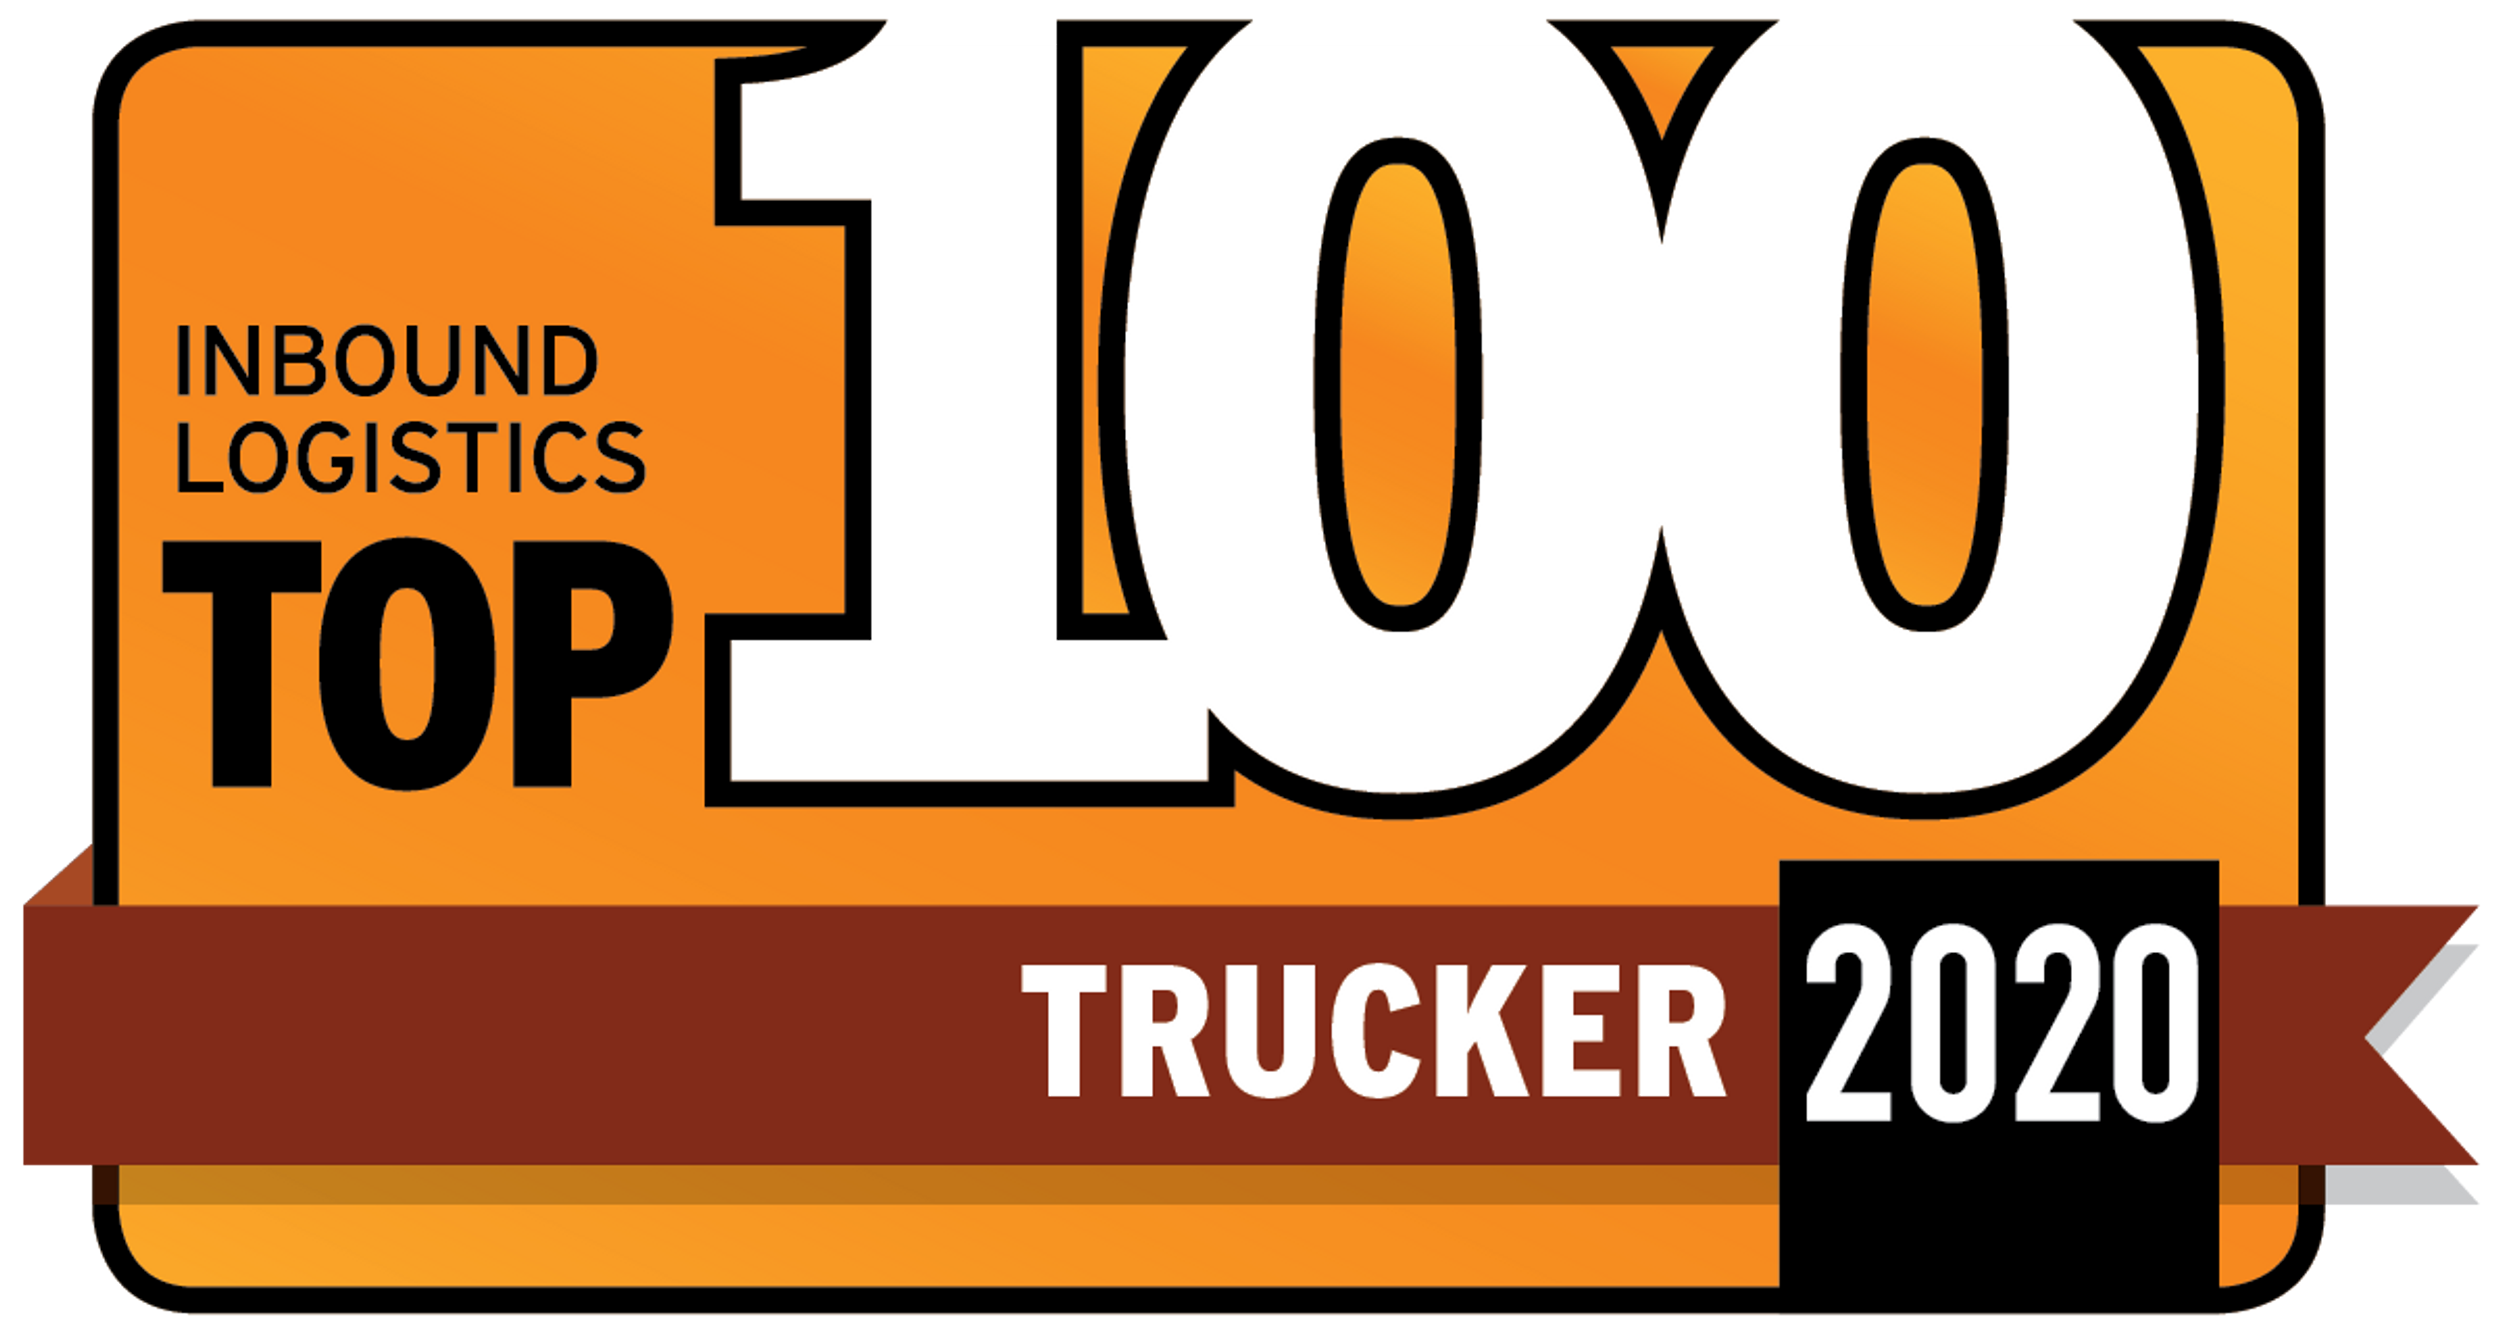 Top 100 Trucker logo